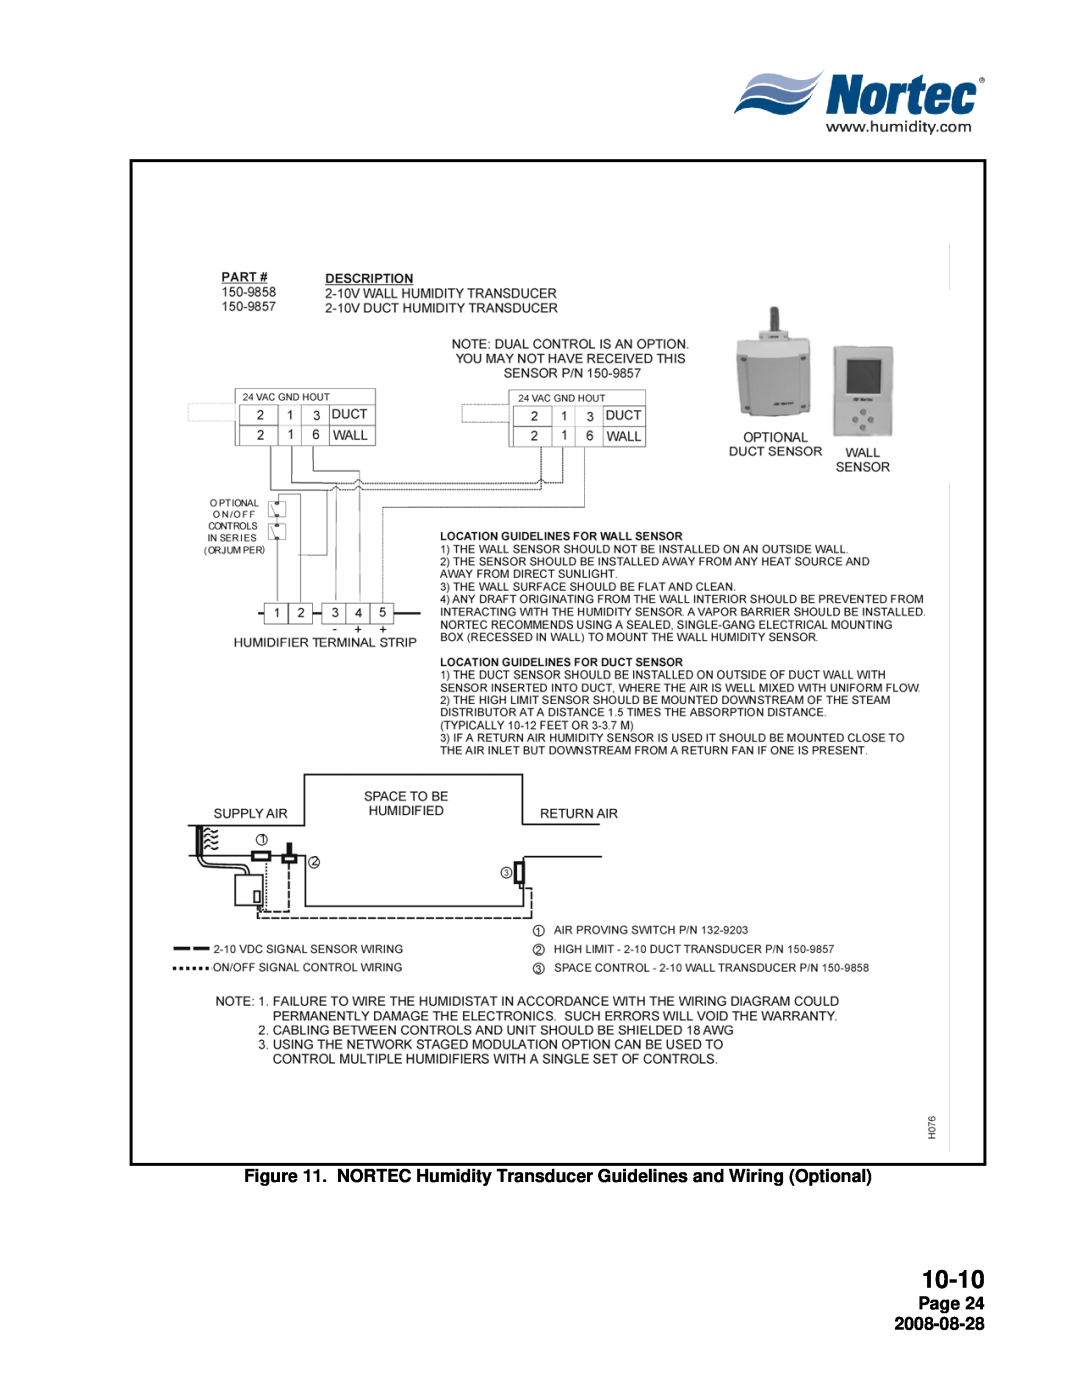 Nortec NH Series installation manual 10-10, Page 24 